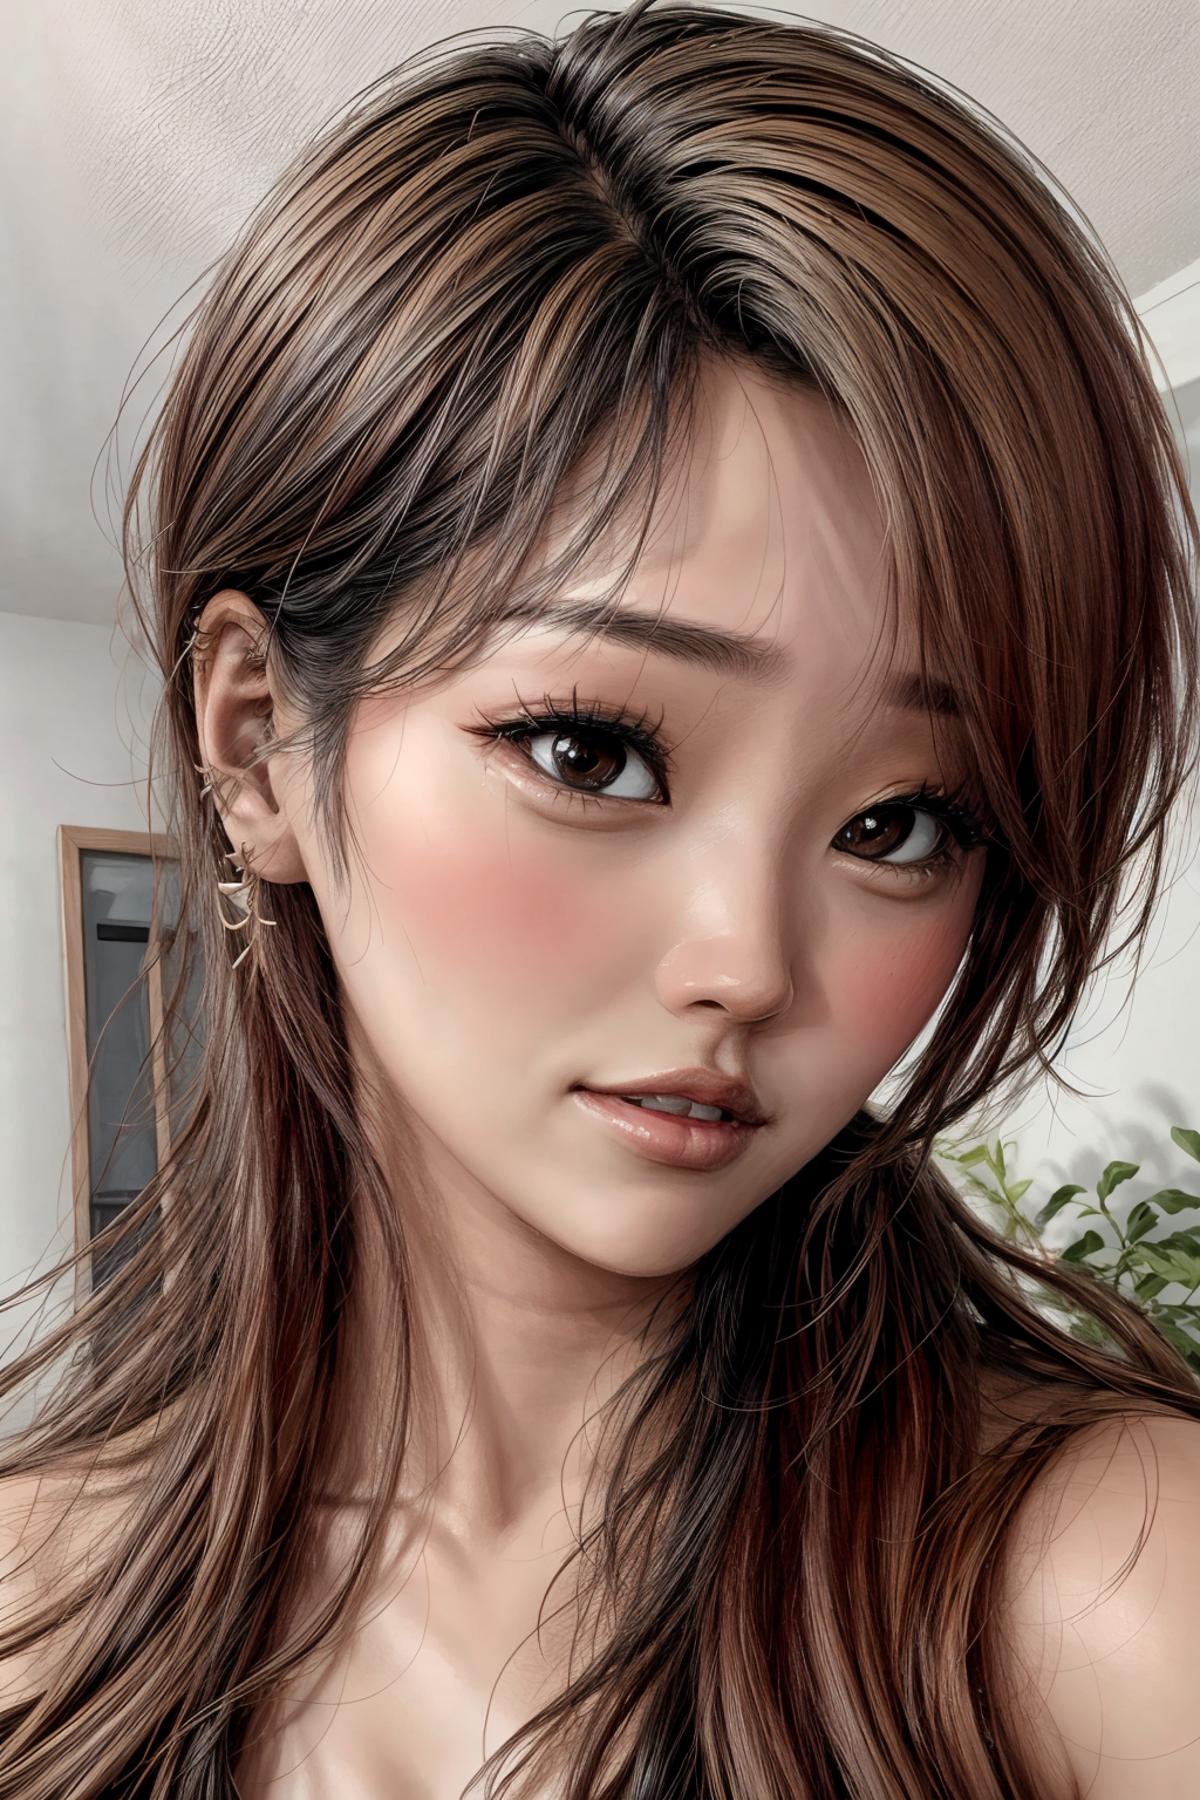 AI model image by BoomAi